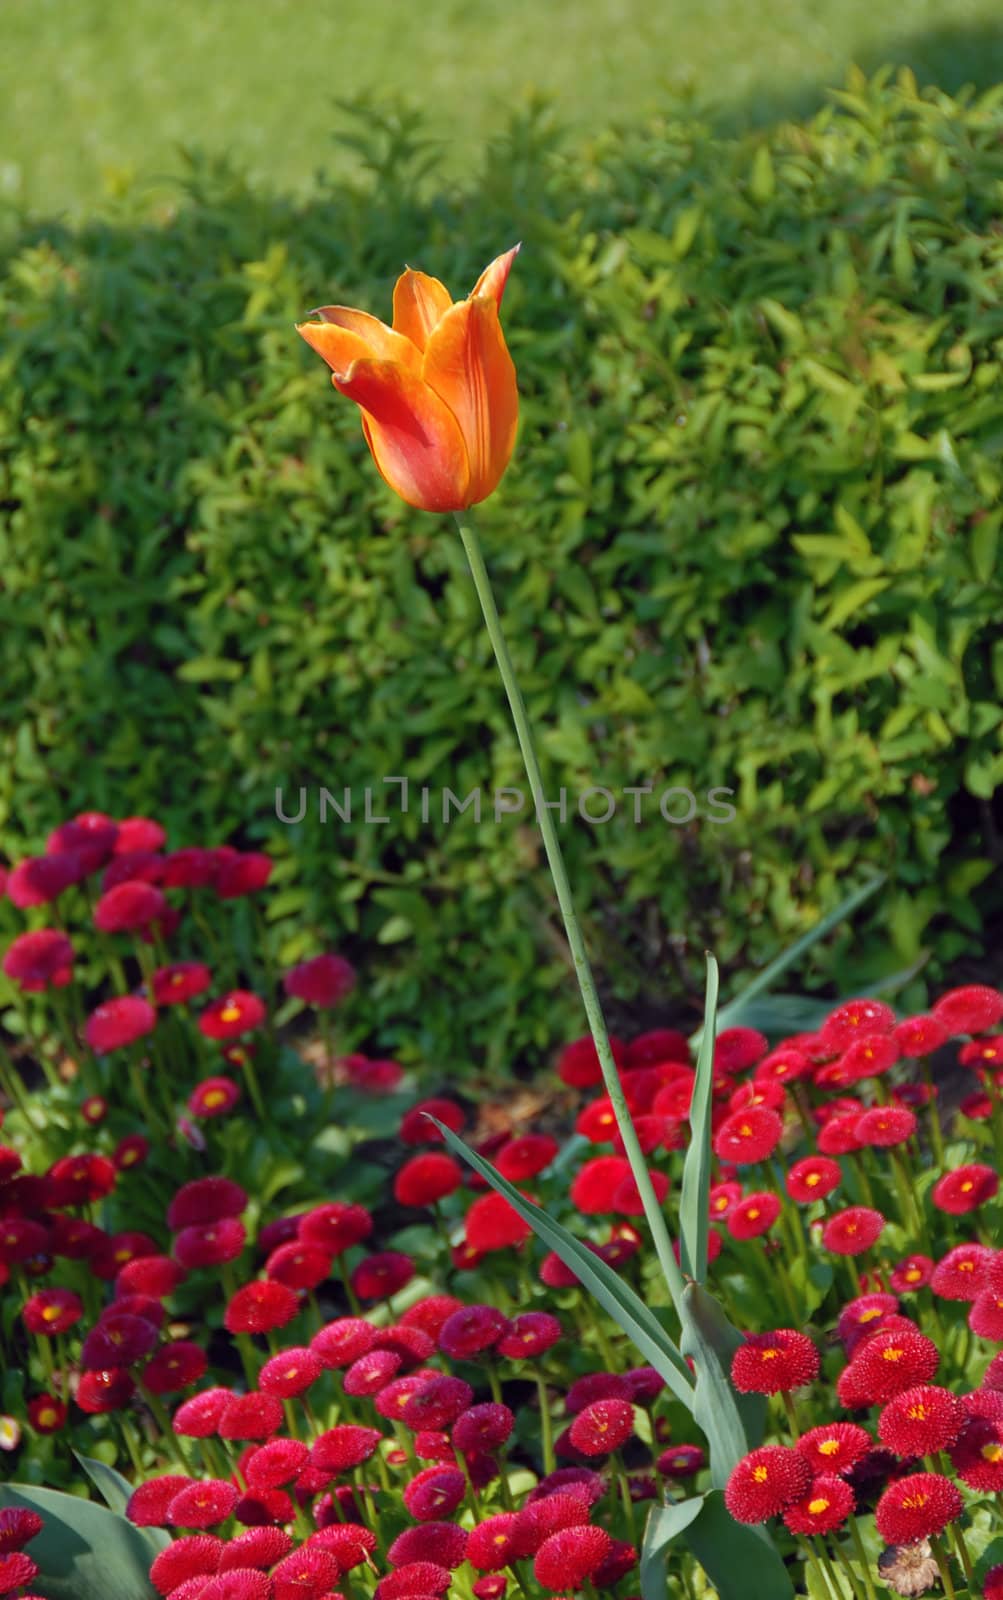 Orange tulip by simply